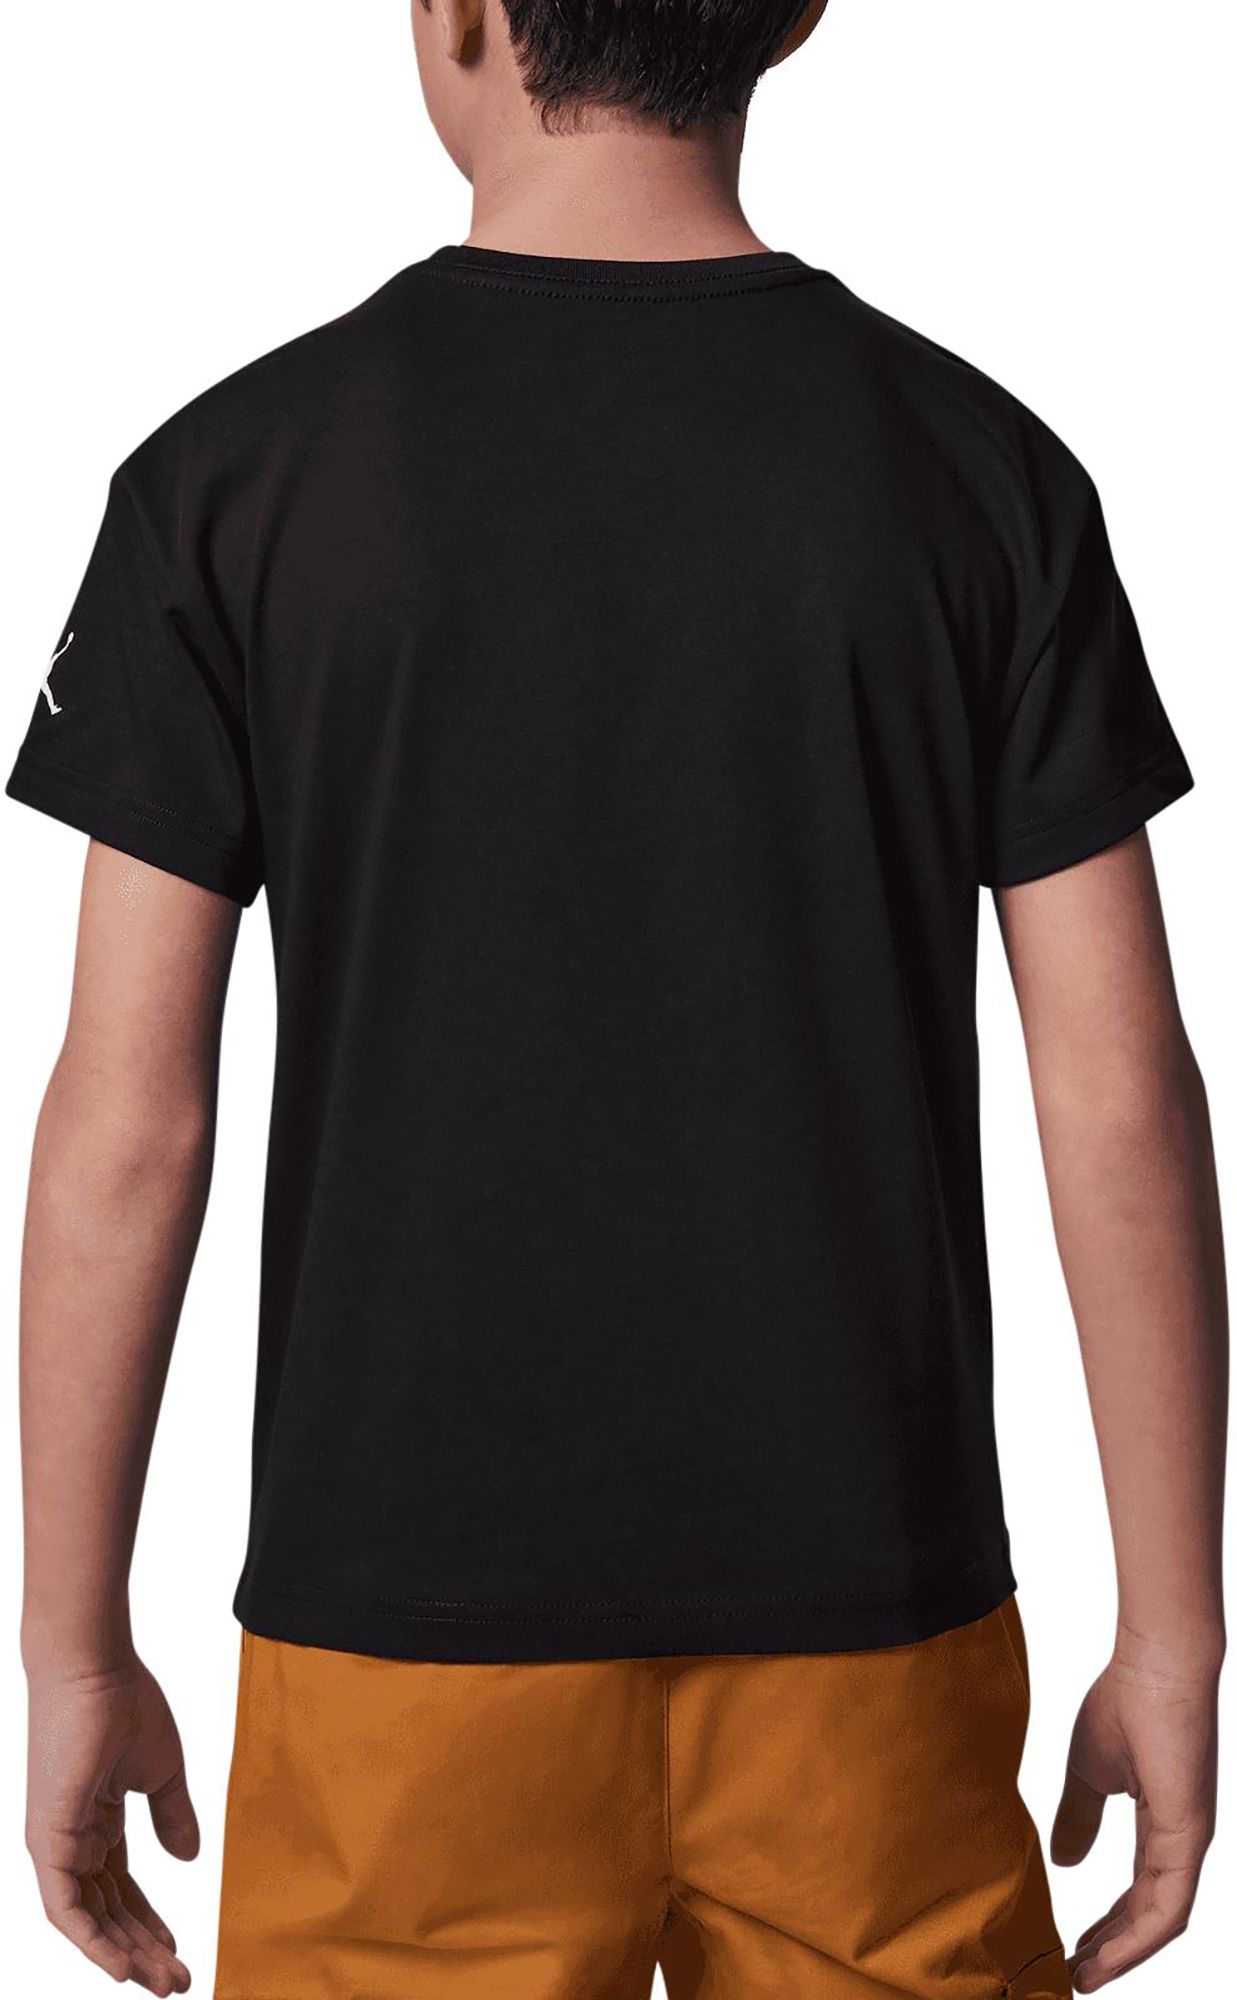 Jordan Boys' Air 1 Patch T-Shirt